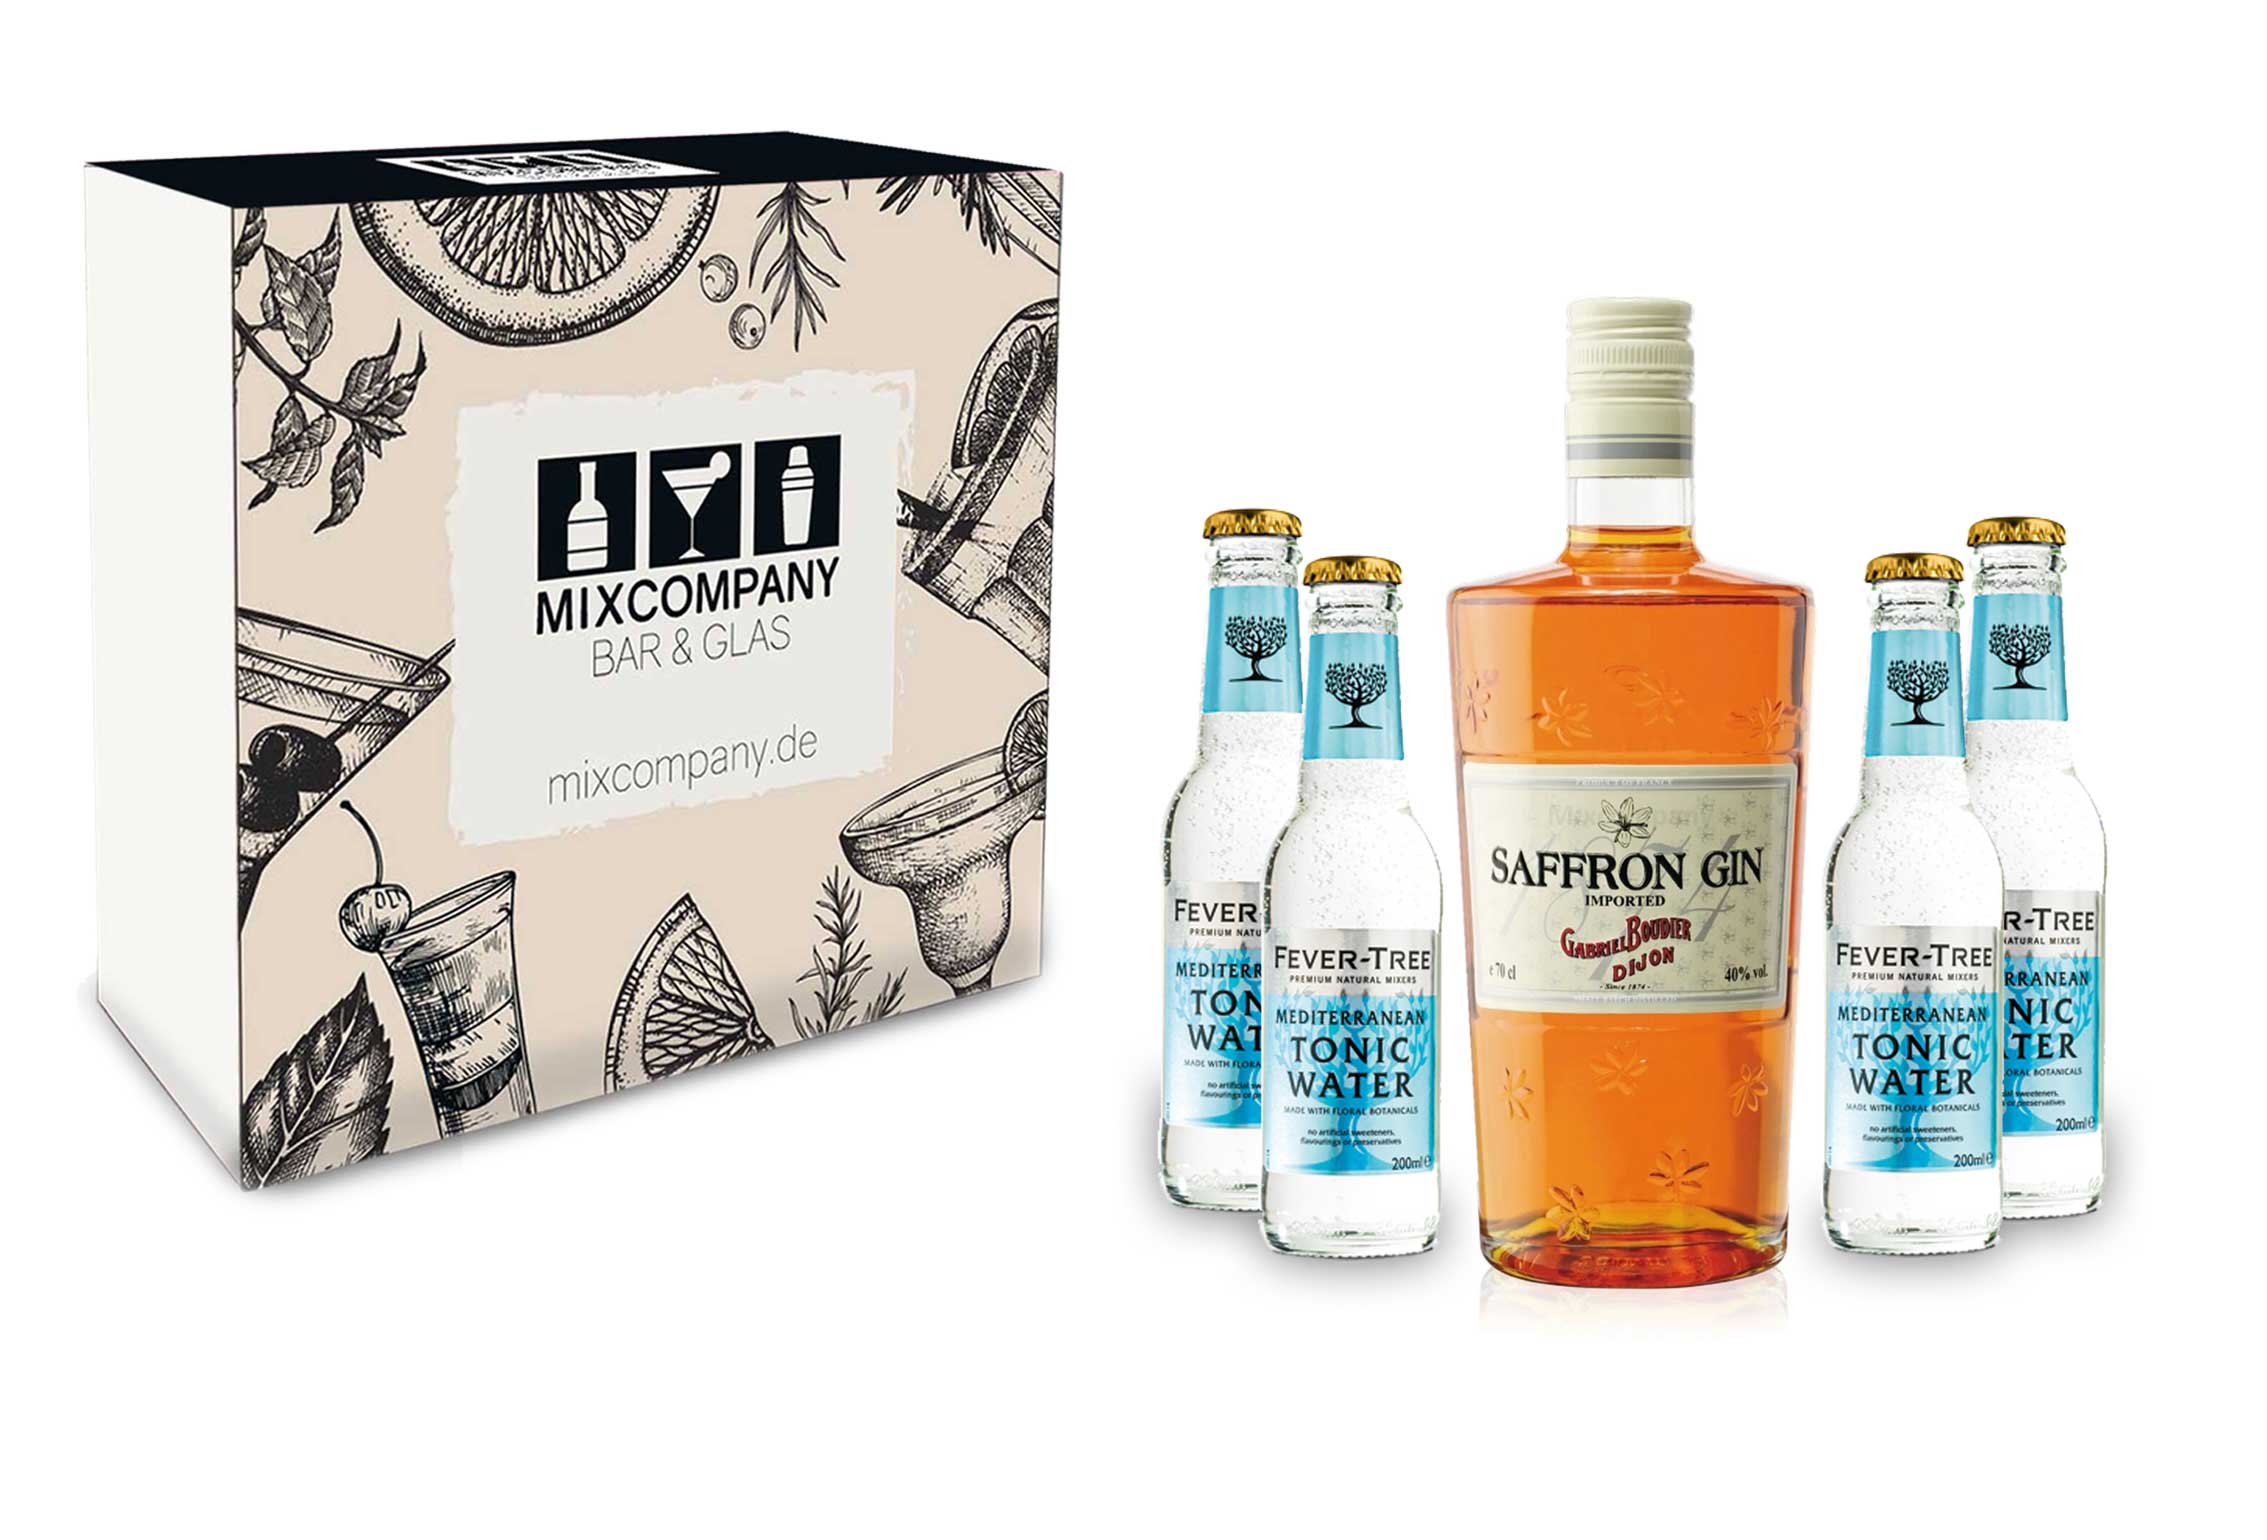 Saffron Geschenkset - Gin 0,7l 700ml (40% Vol) + 4x Fever Tree Mediterranean Tonic Water 200ml inkl. Pfand MEHRWEG + Geschenkverpackung